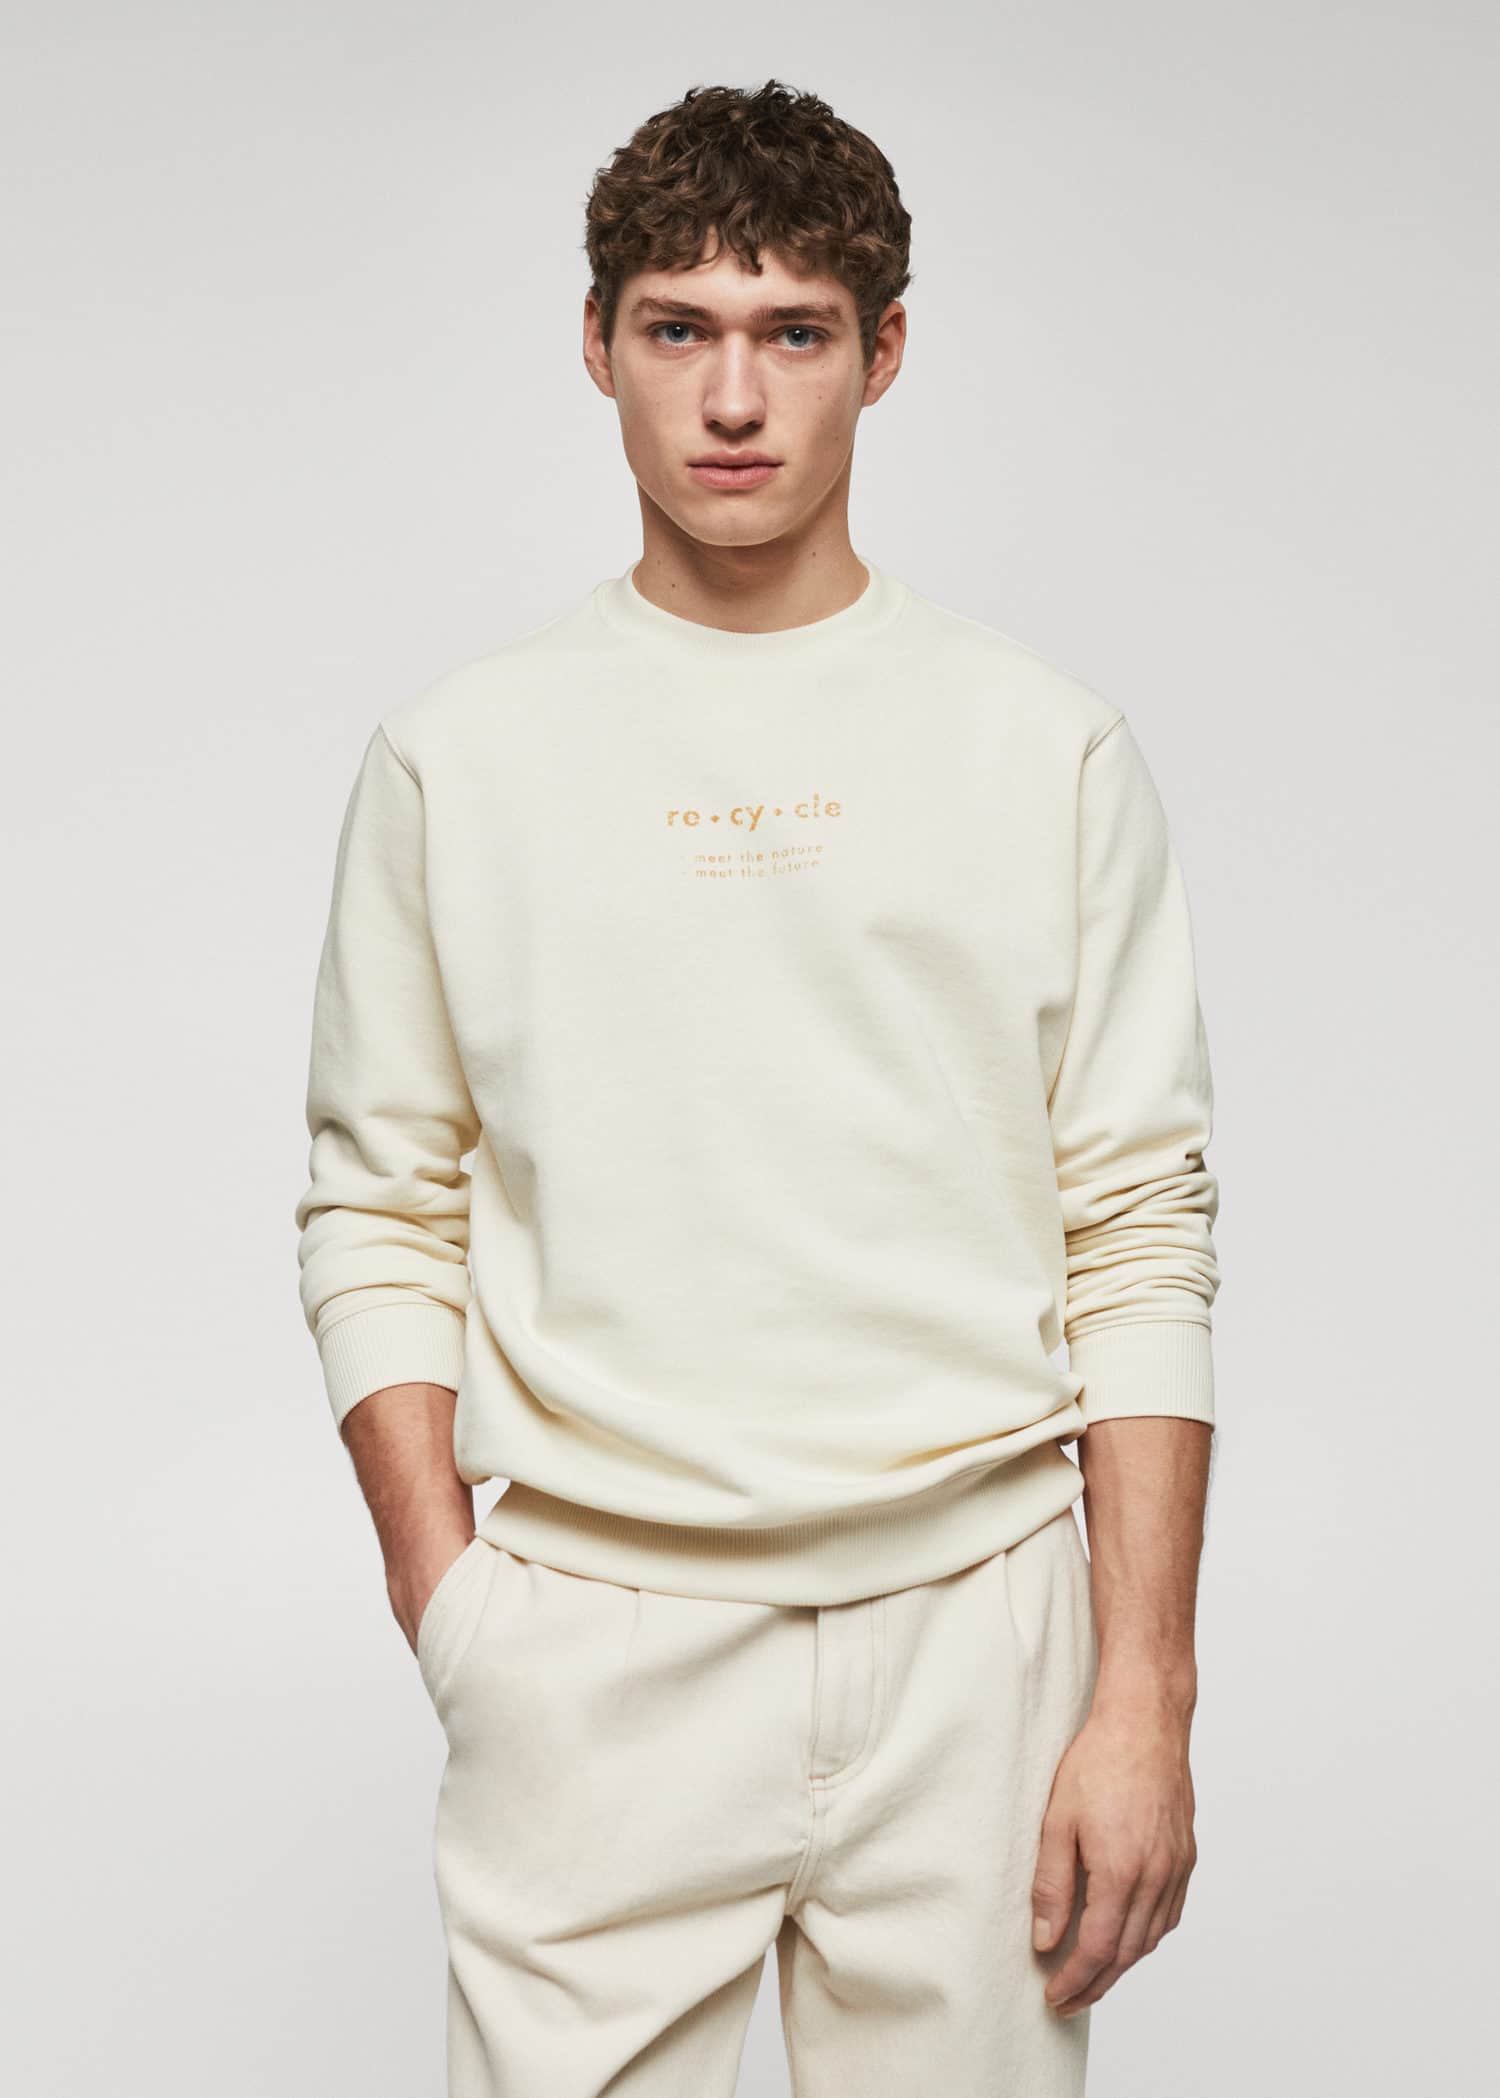 100% cotton sweatshirt text - Medium plane